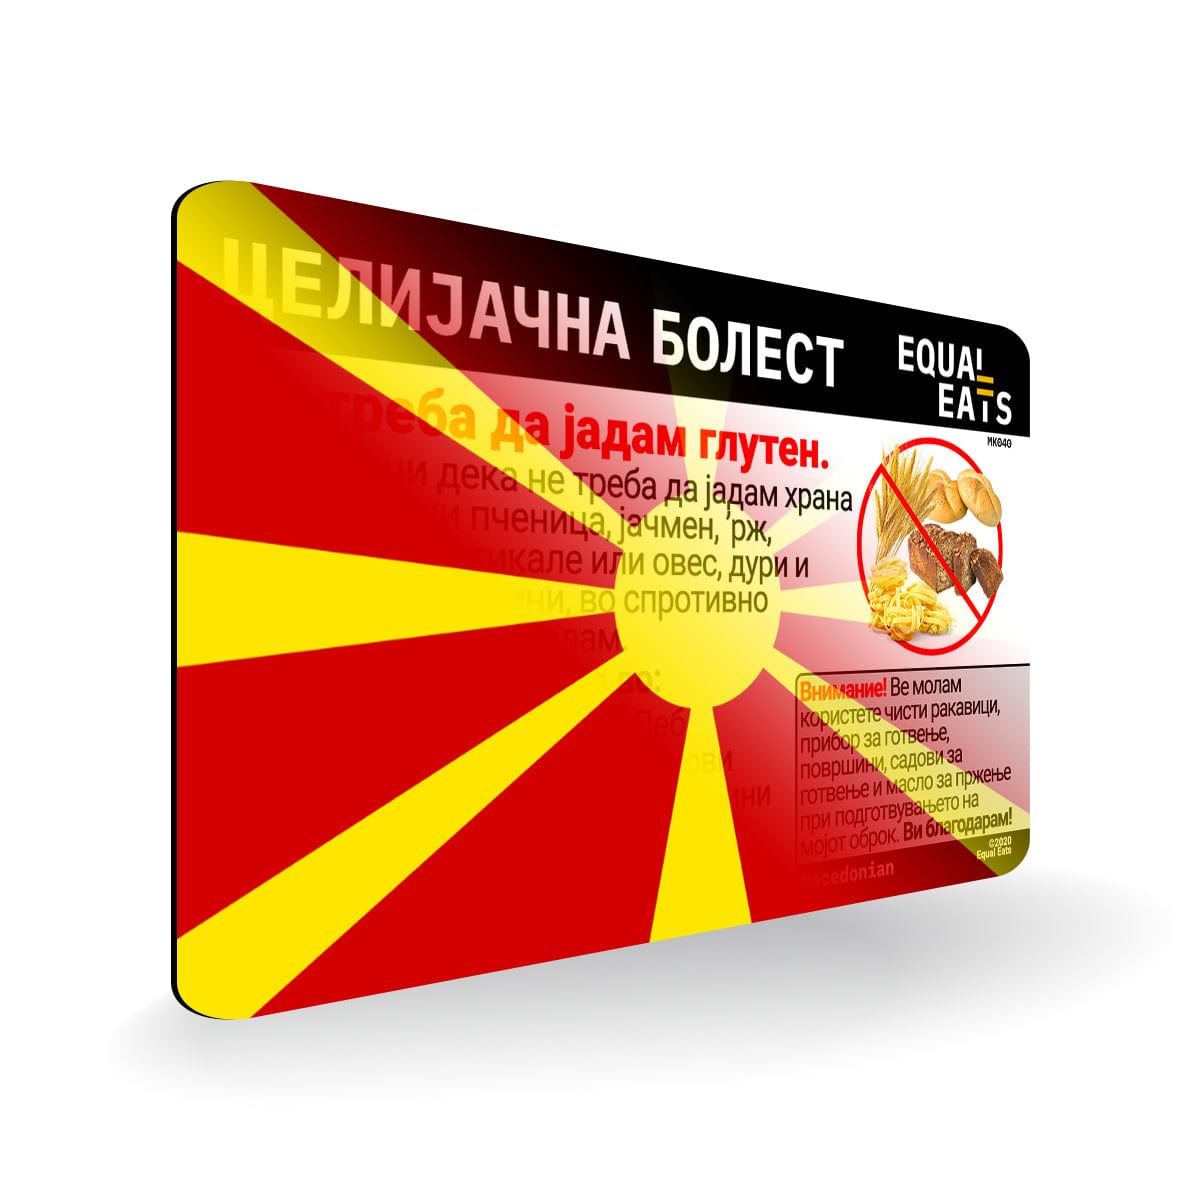 Macedonian Celiac Disease Card - Gluten Free Travel in Macedonia